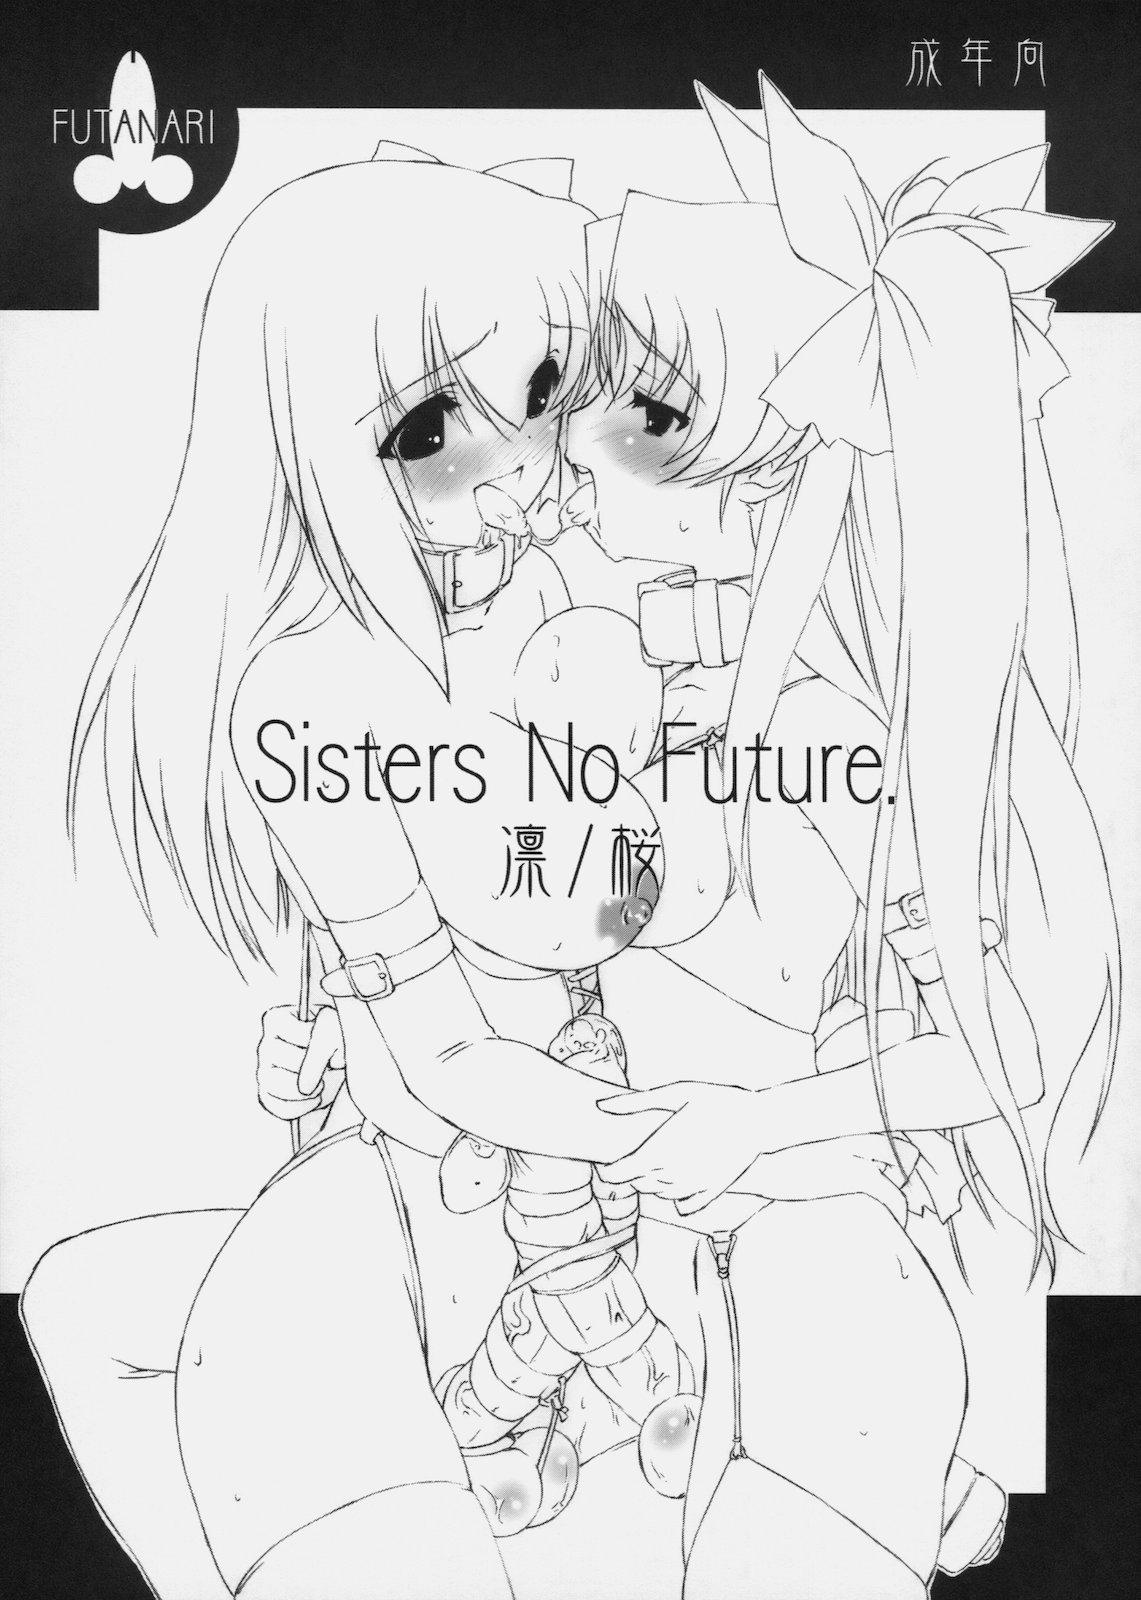 Sister No Future. Rin/Sakura 0